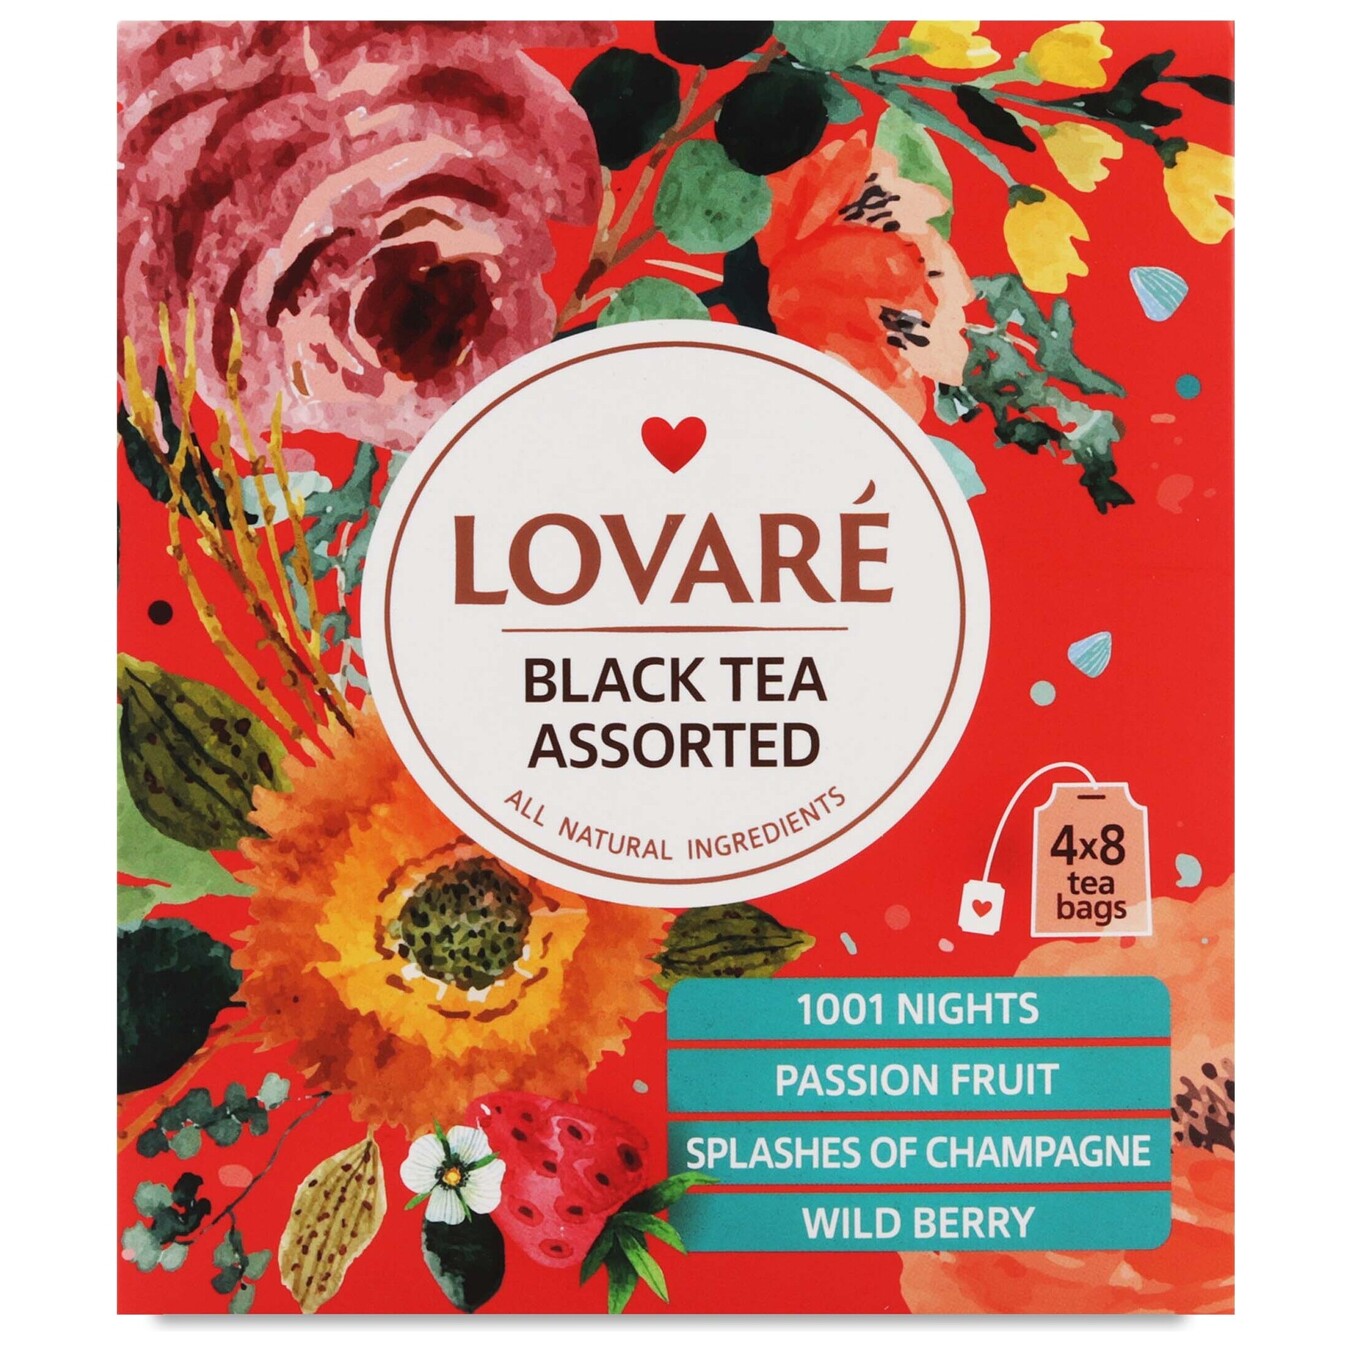 Lovare Assorted Black Tea packaged 4 * 8 pcs